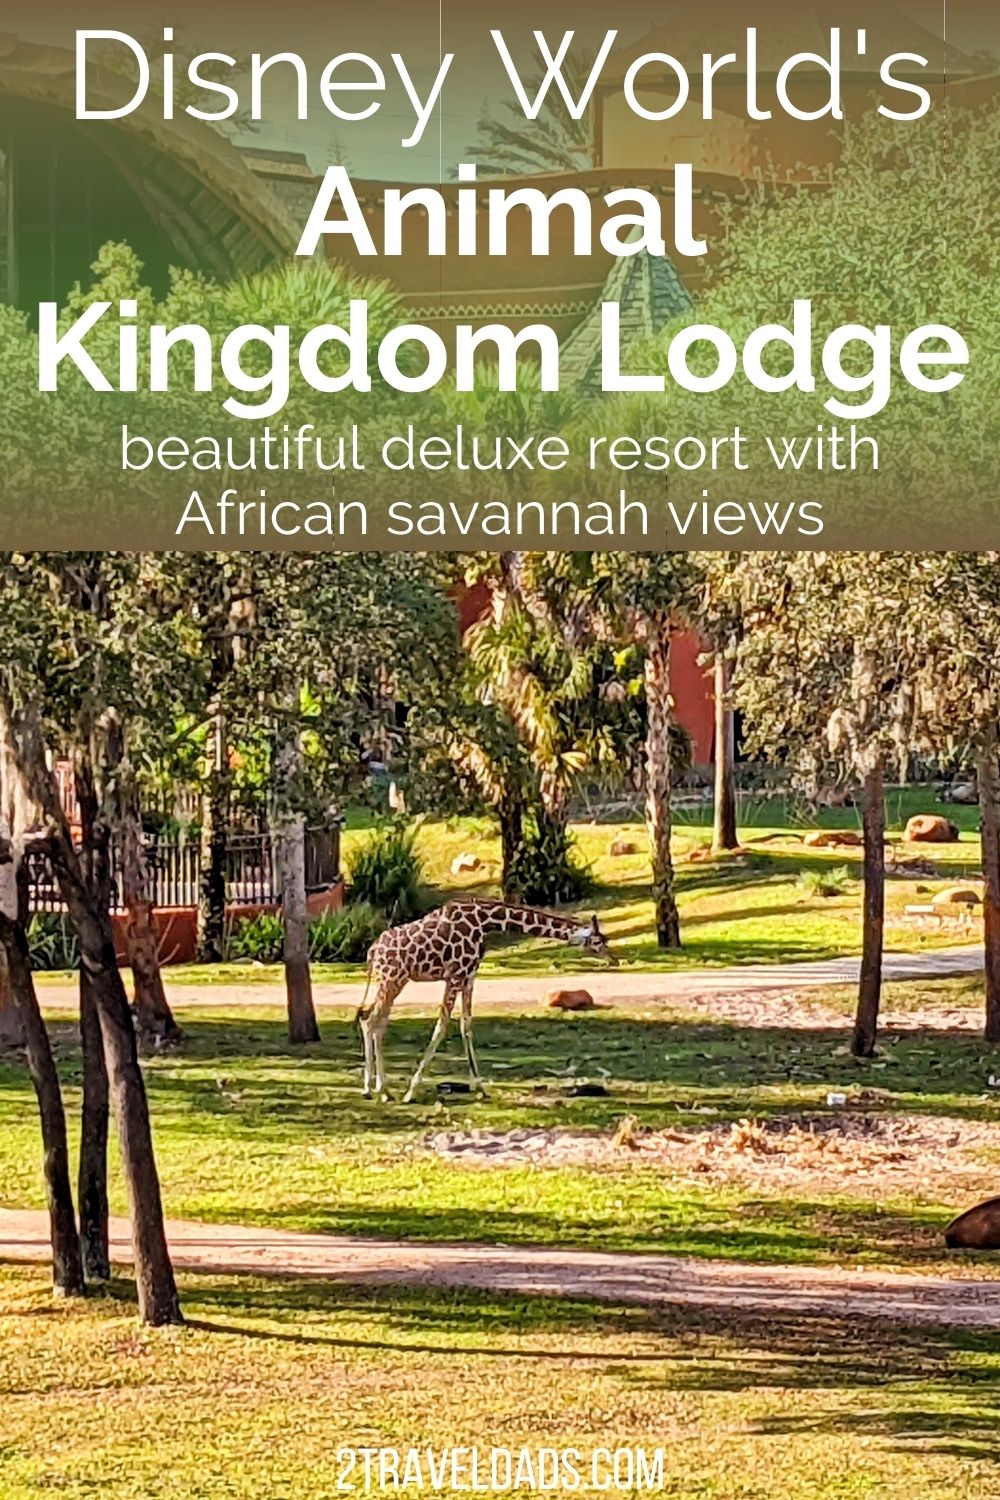 Review of Disney's Animal Kingdom Lodge: It's Pretty Magical